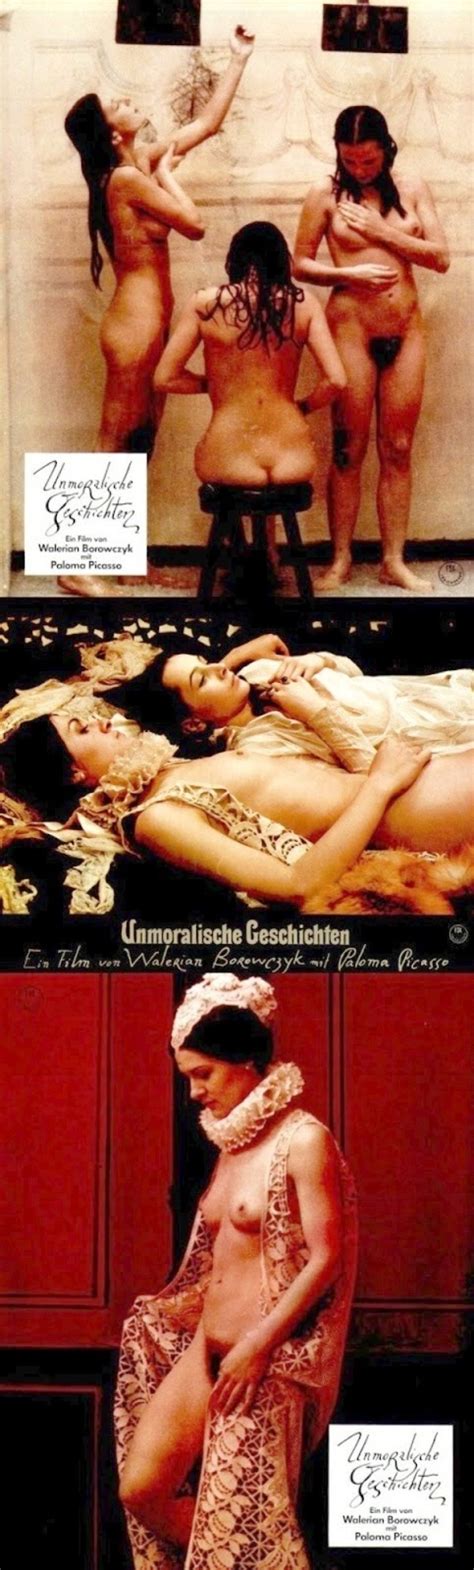 Contes Immoraux AKA Immoral Tales EroGarga Watch Free Vintage Porn Movies Retro Sex